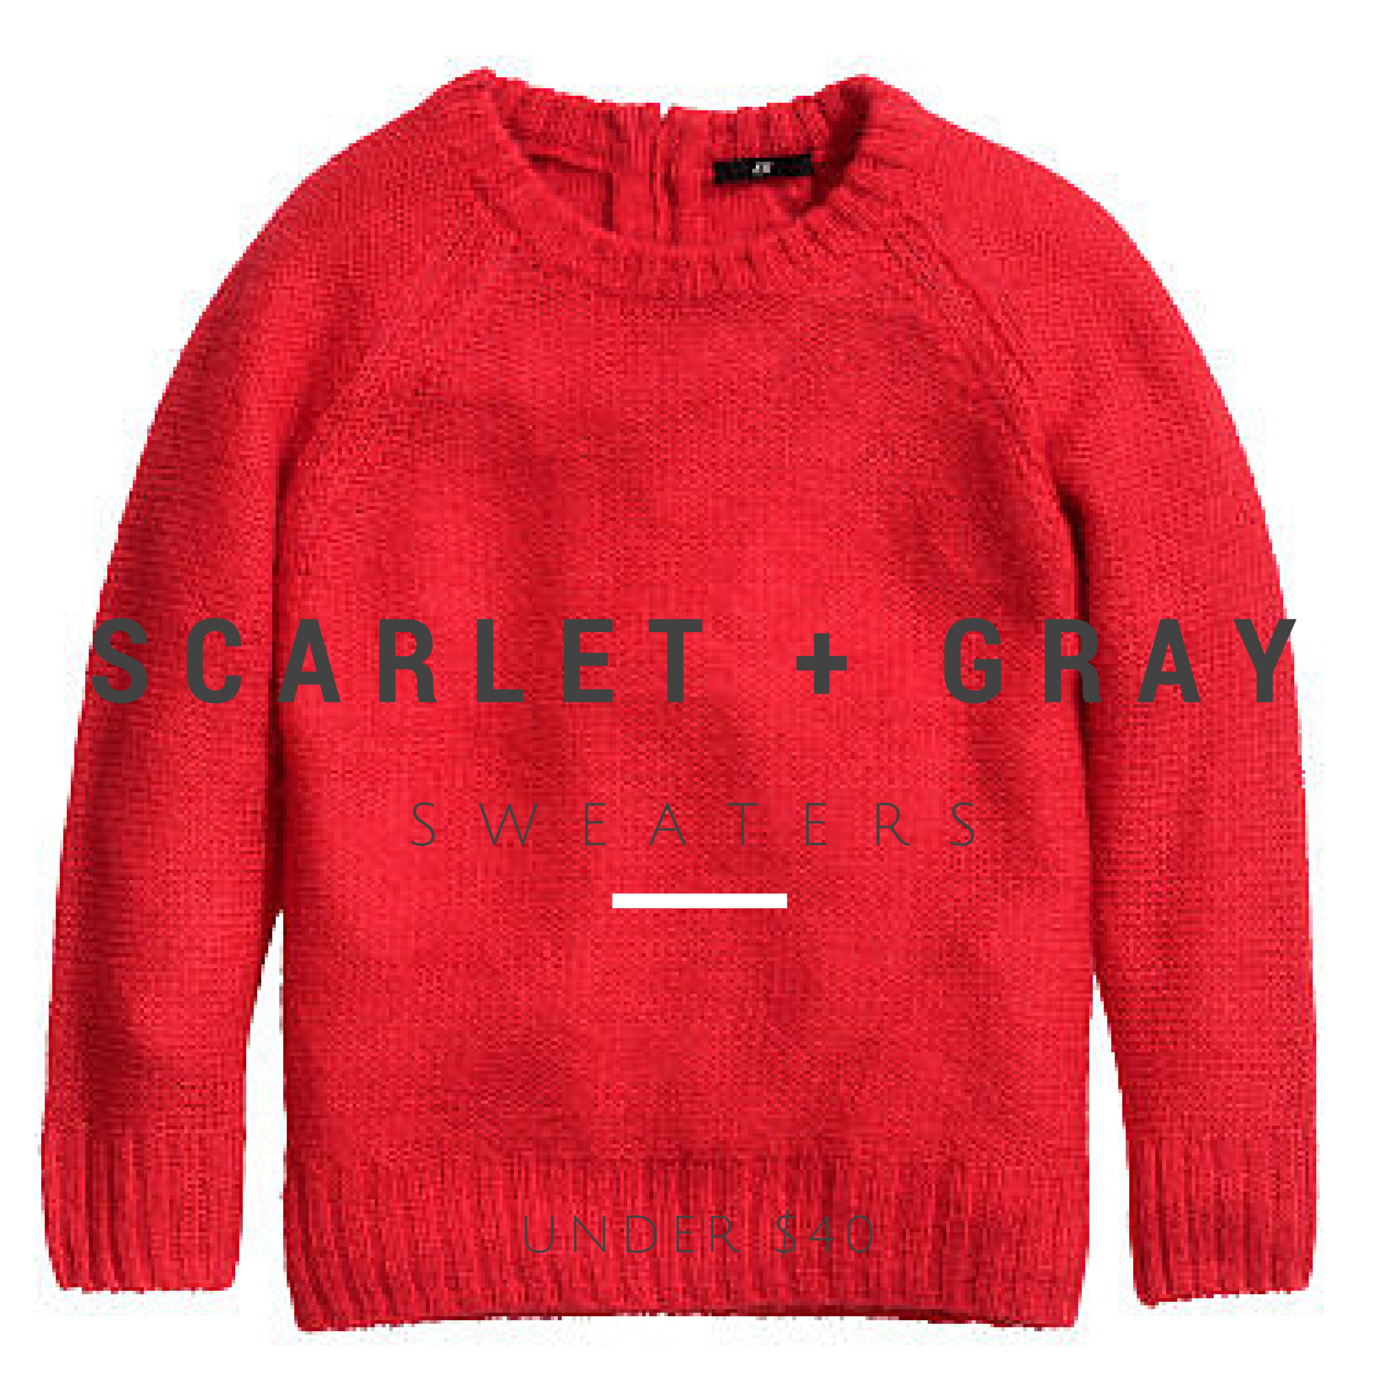 8 Scarlet + Gray Sweaters Under $40